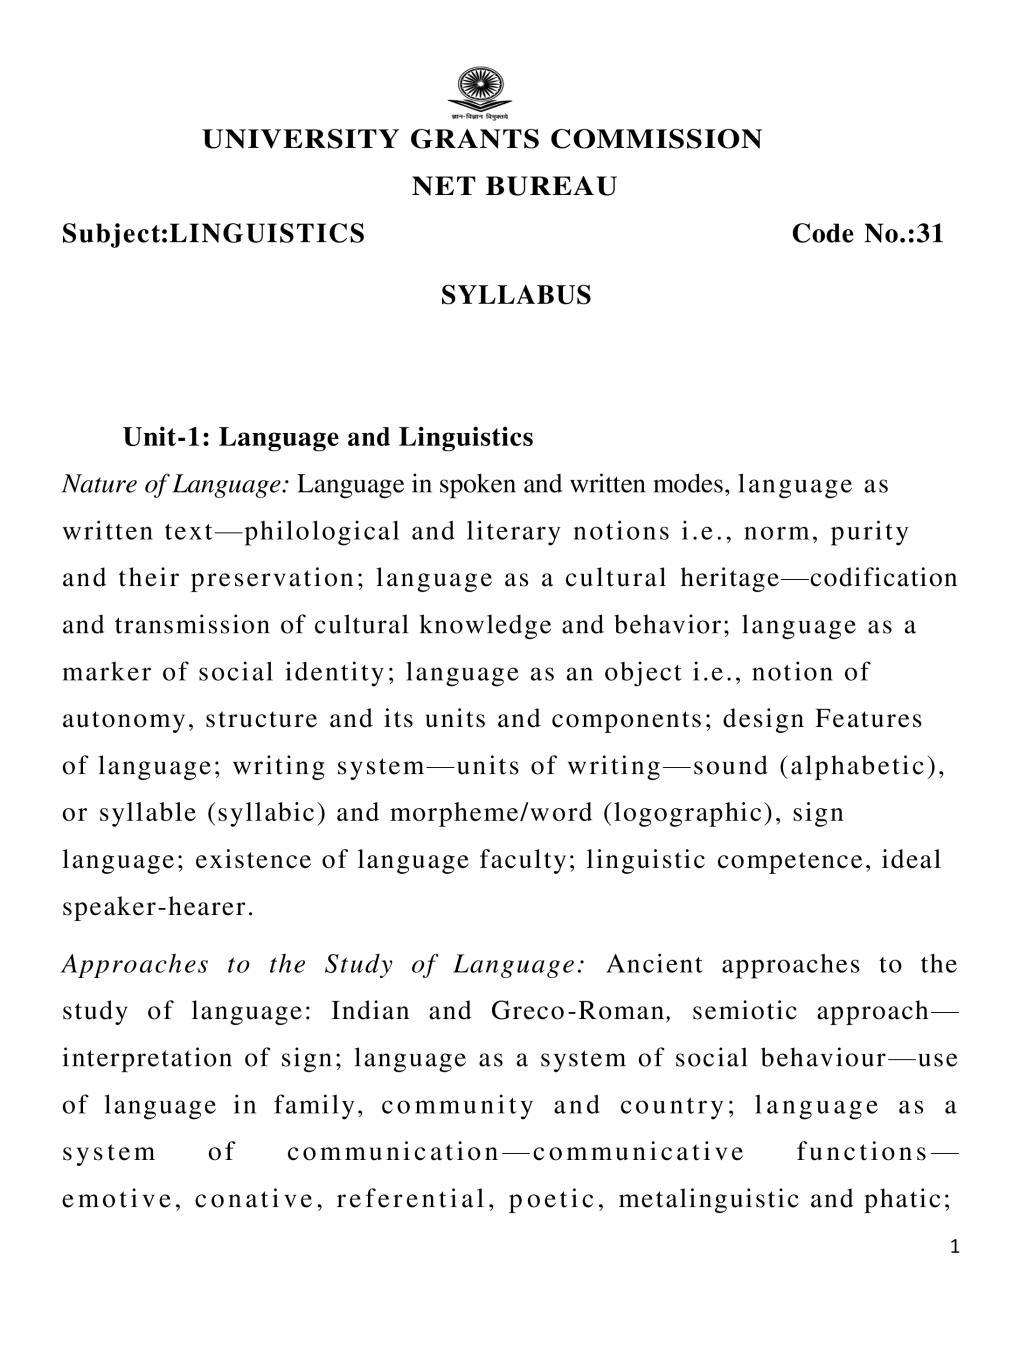 UGC NET Syllabus for Linguistics 2020 - Page 1